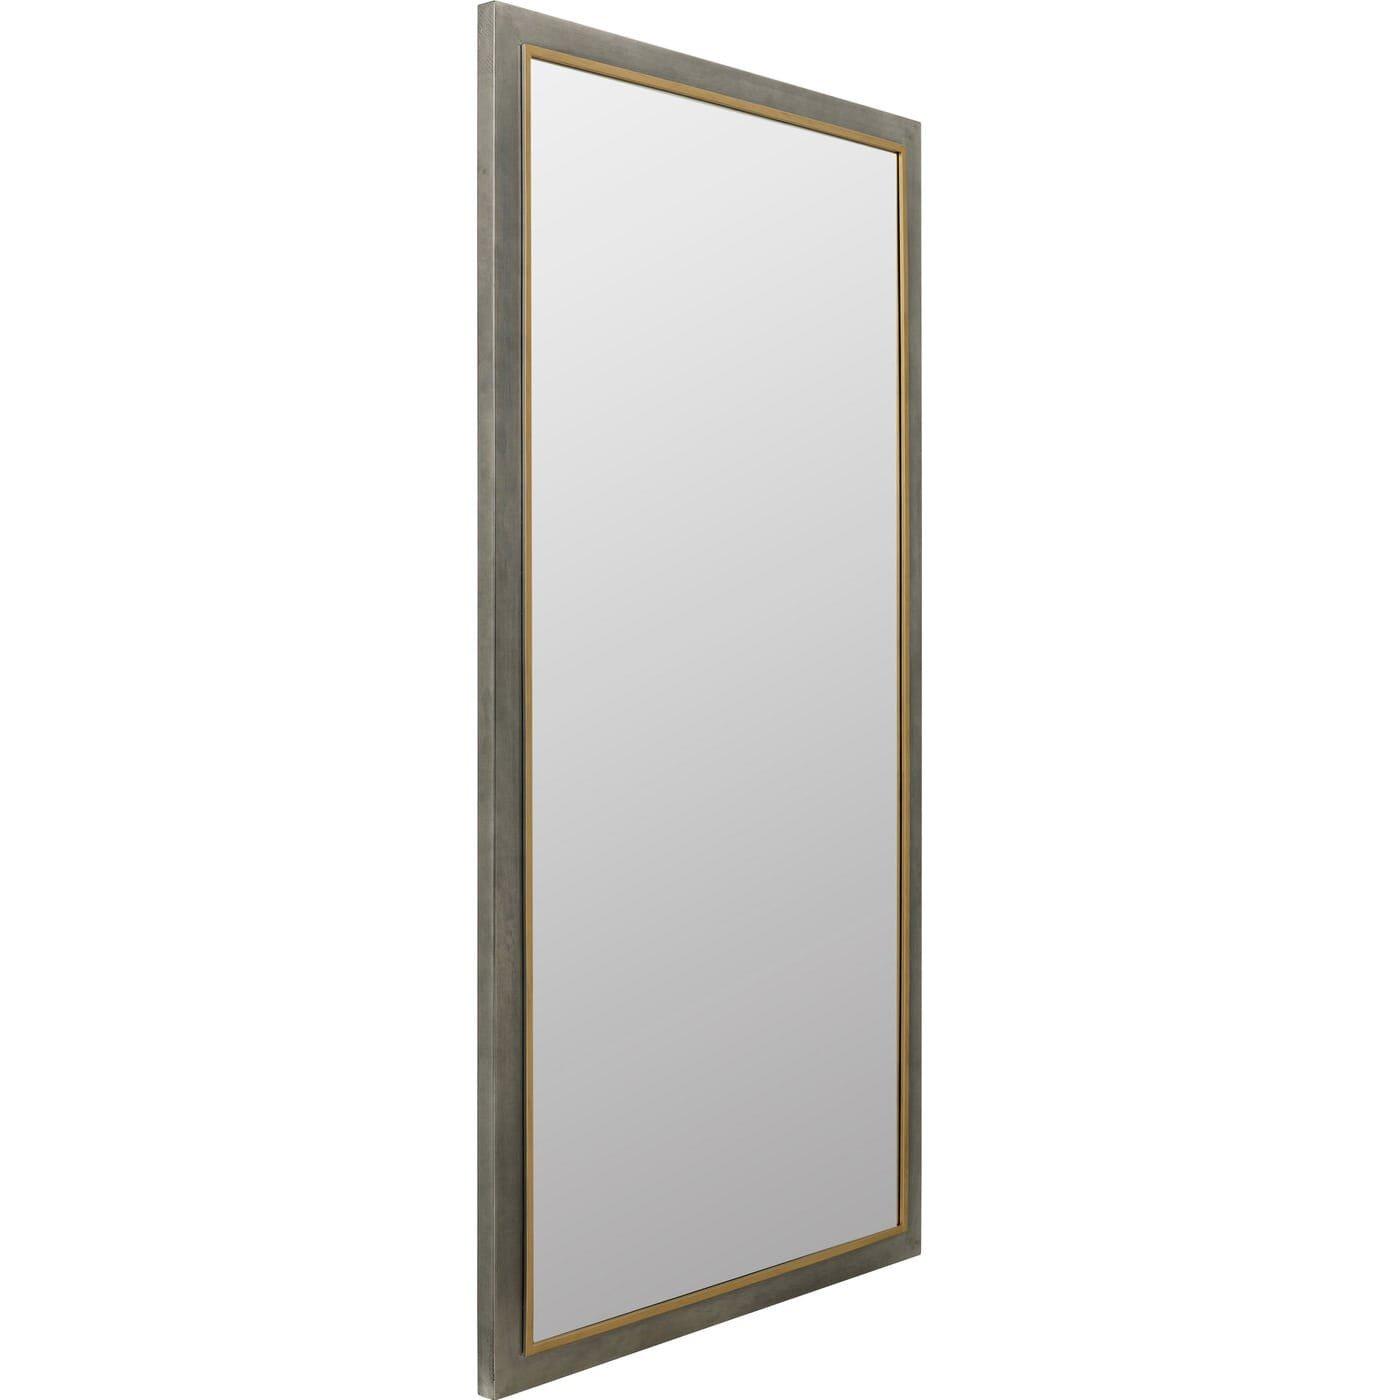 KARE Design Specchio da parete Nuance 90x180  